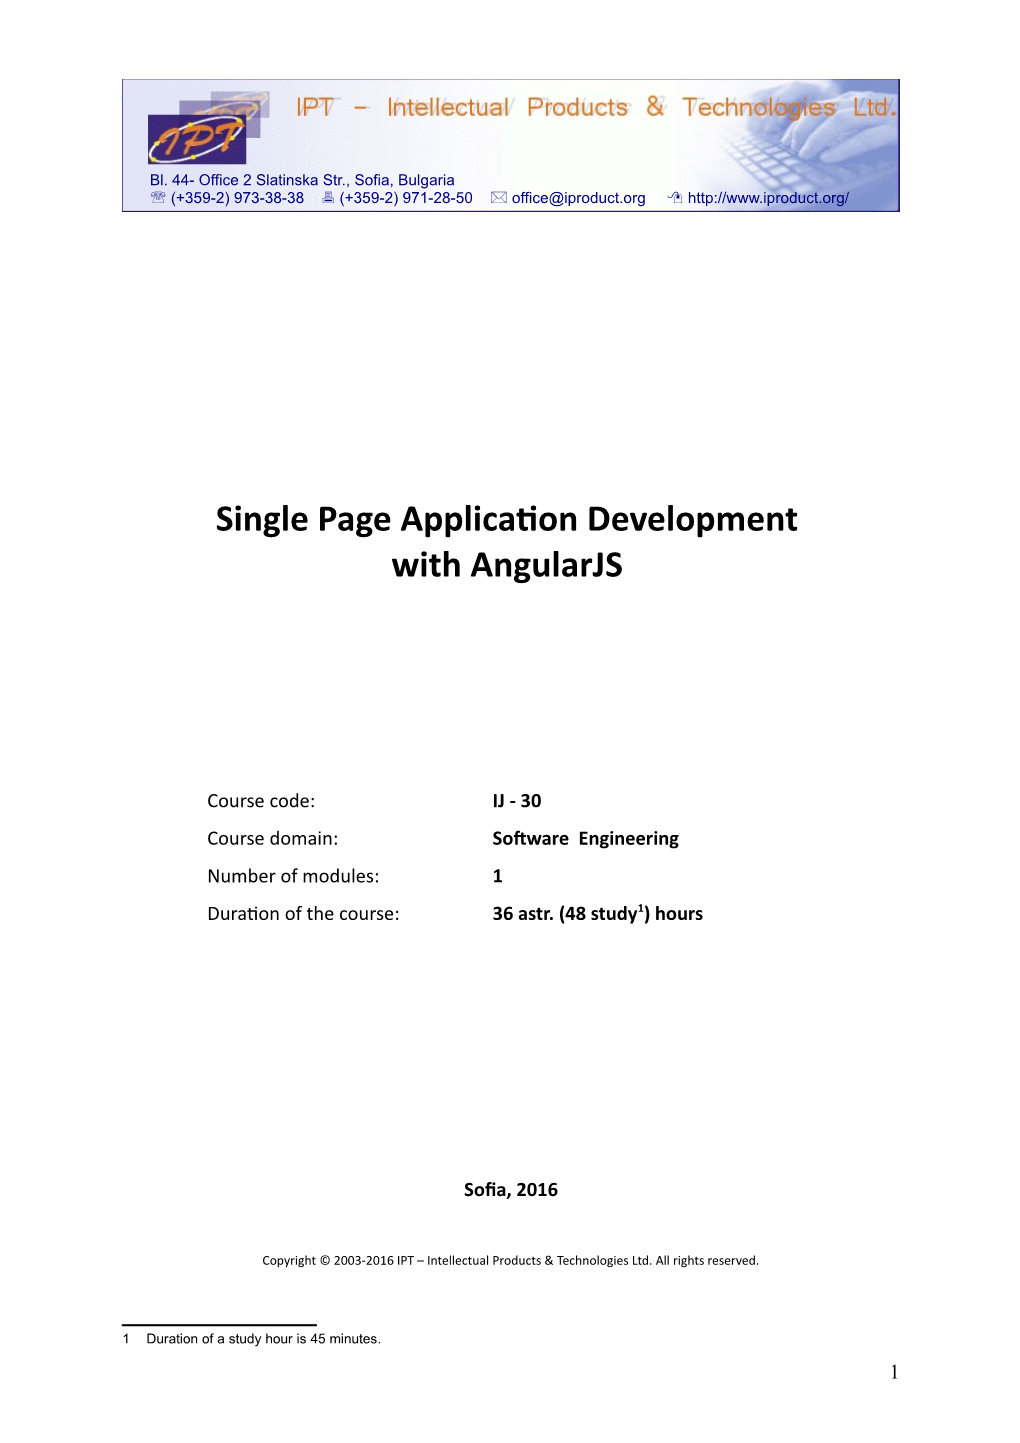 Single Page Application Development with Angularjs